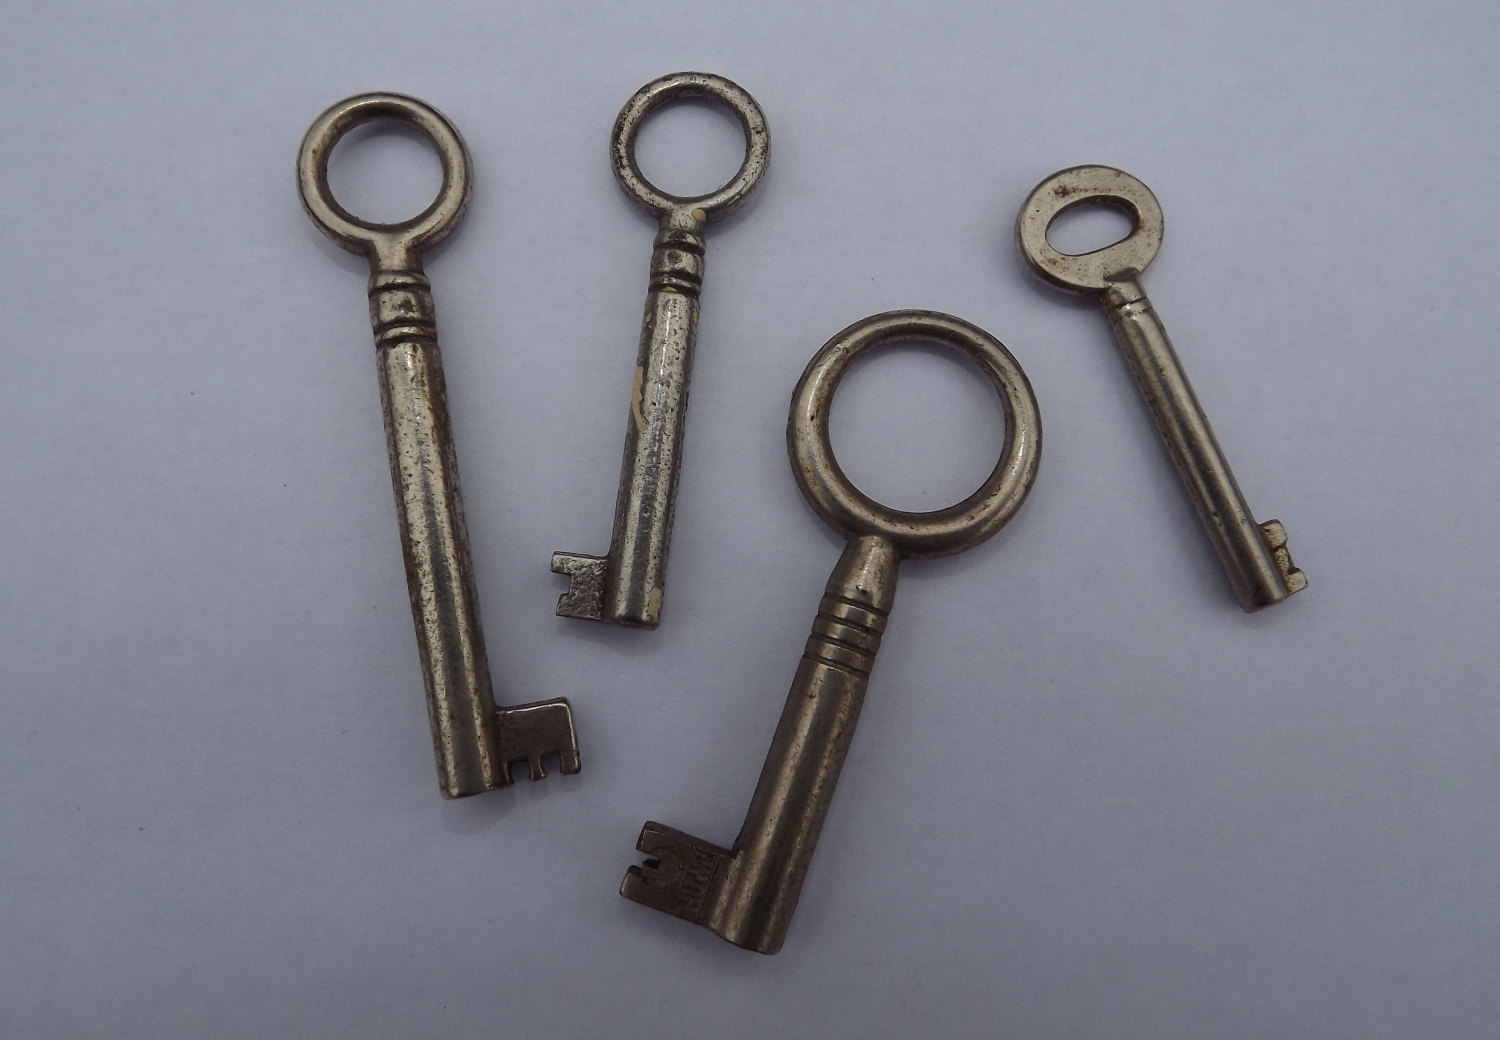 Vintage Keys, Steampunk, Shiny Keys, Home Decor, Key Ring, Steampunk Supplies, Jewellery Project, Old Keys, Small, 4 Keys, ref 17.3a steampunk buy now online